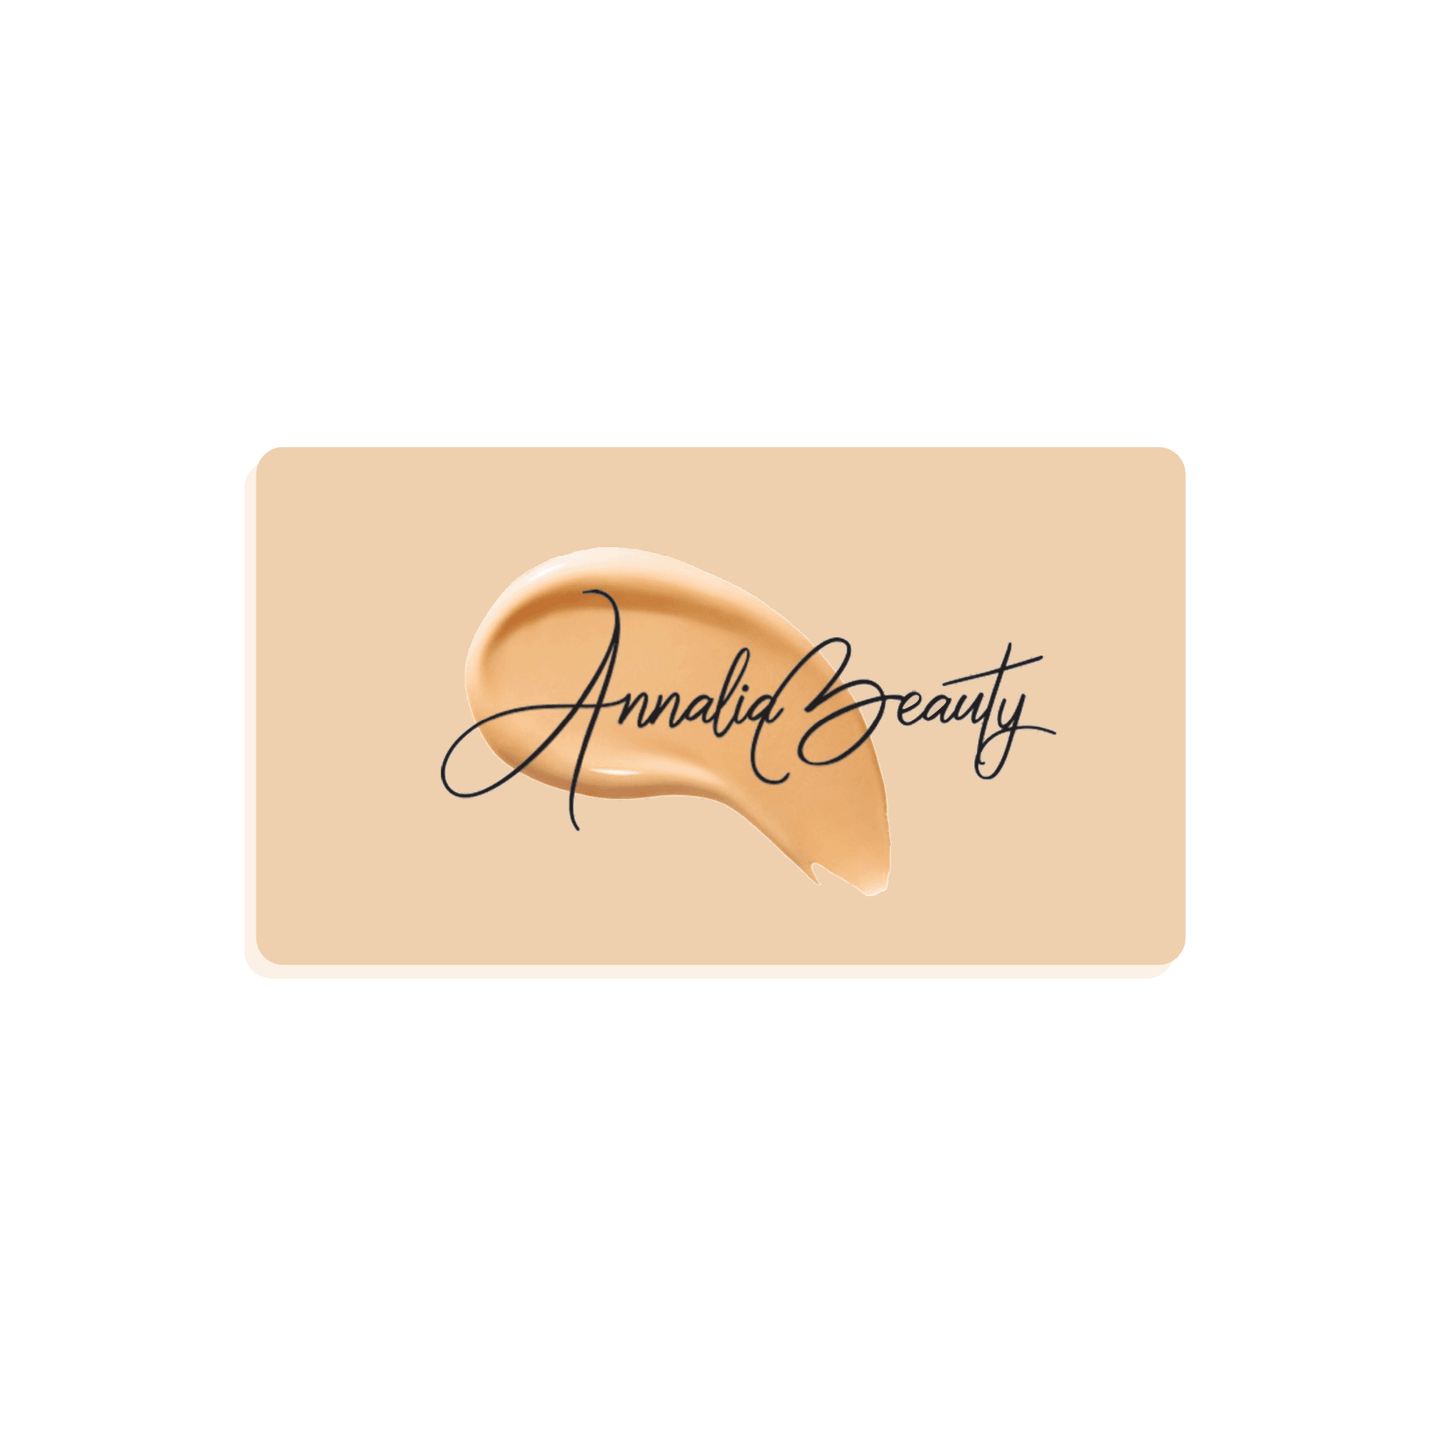 Annalia Beauty Gift Card - AnnaliaBeauty